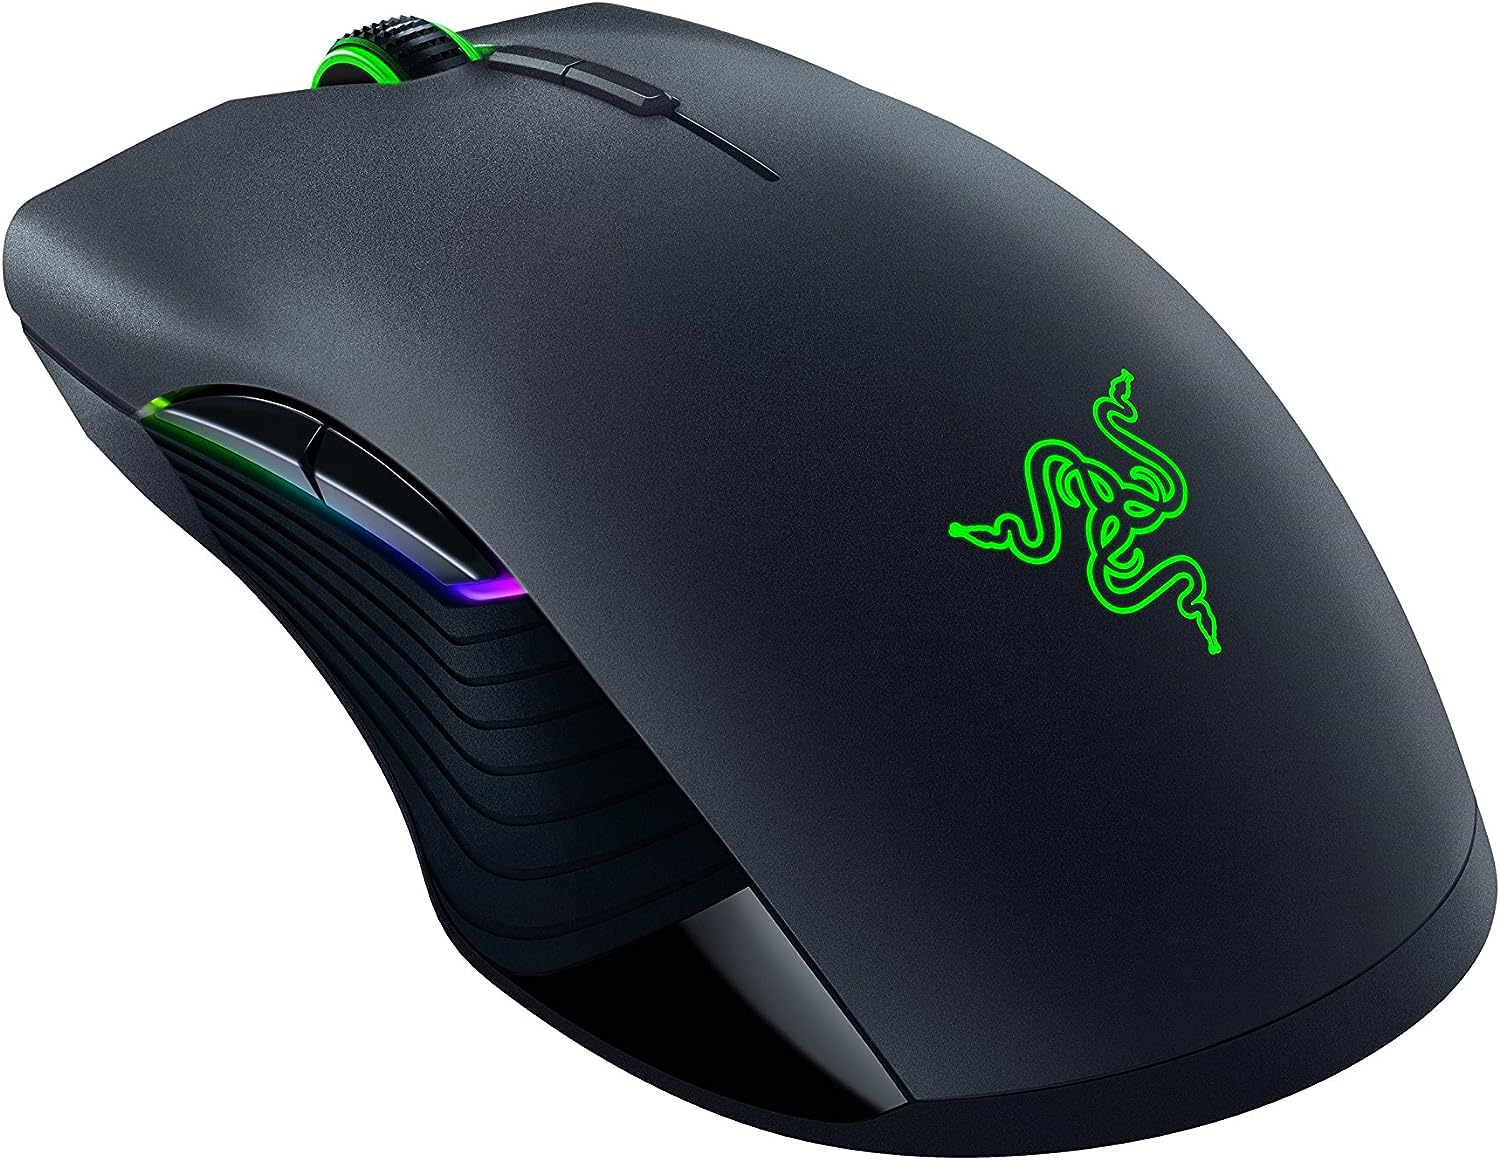 Razer Lancehead Professional Grade RGB Ambidextrous Wired/Wireless Gaming Mouse - 16000 Adjustible DPI